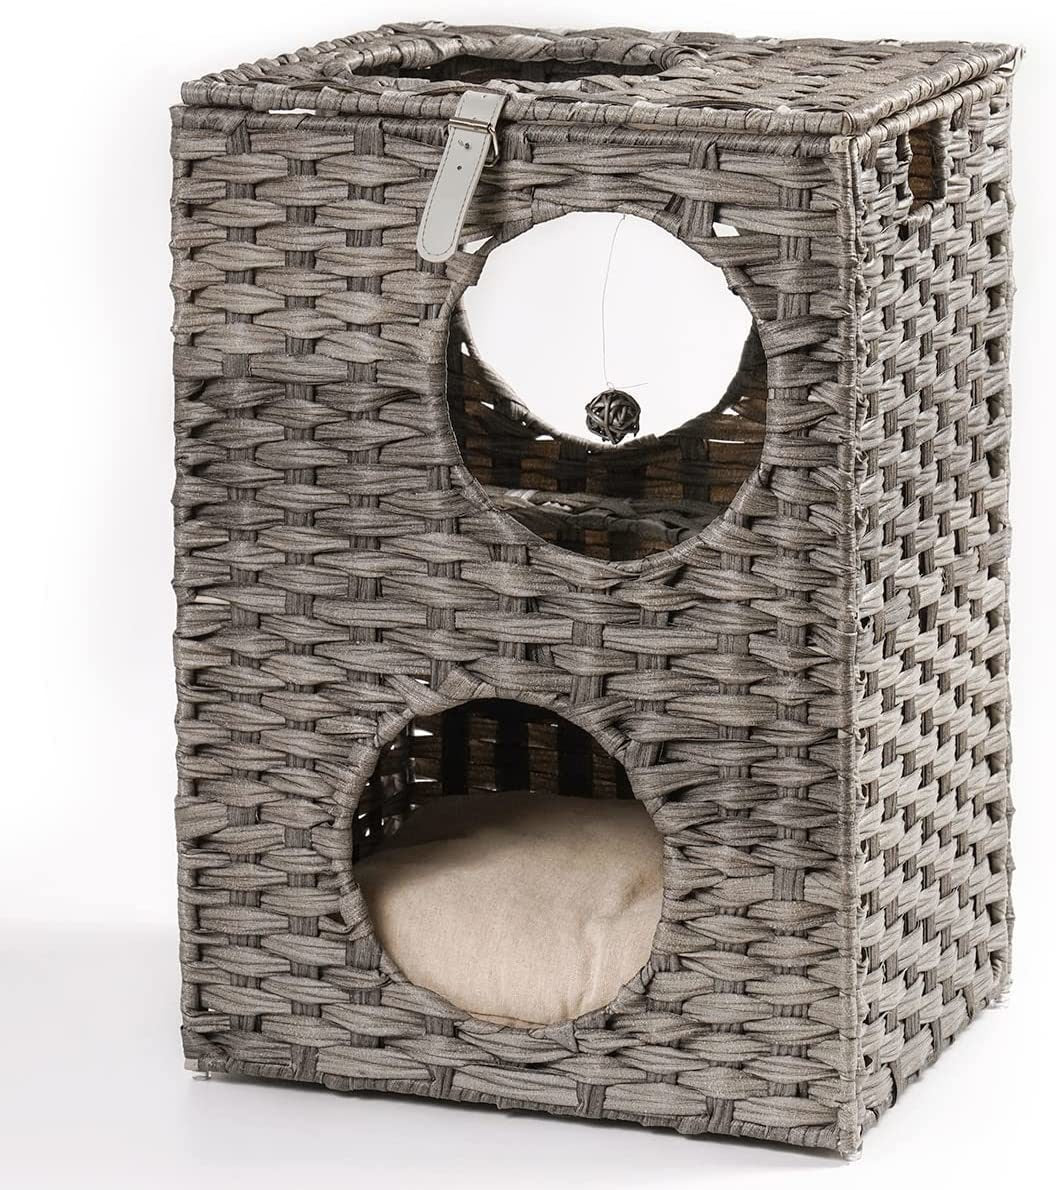 Woven Rattan Cat Basket